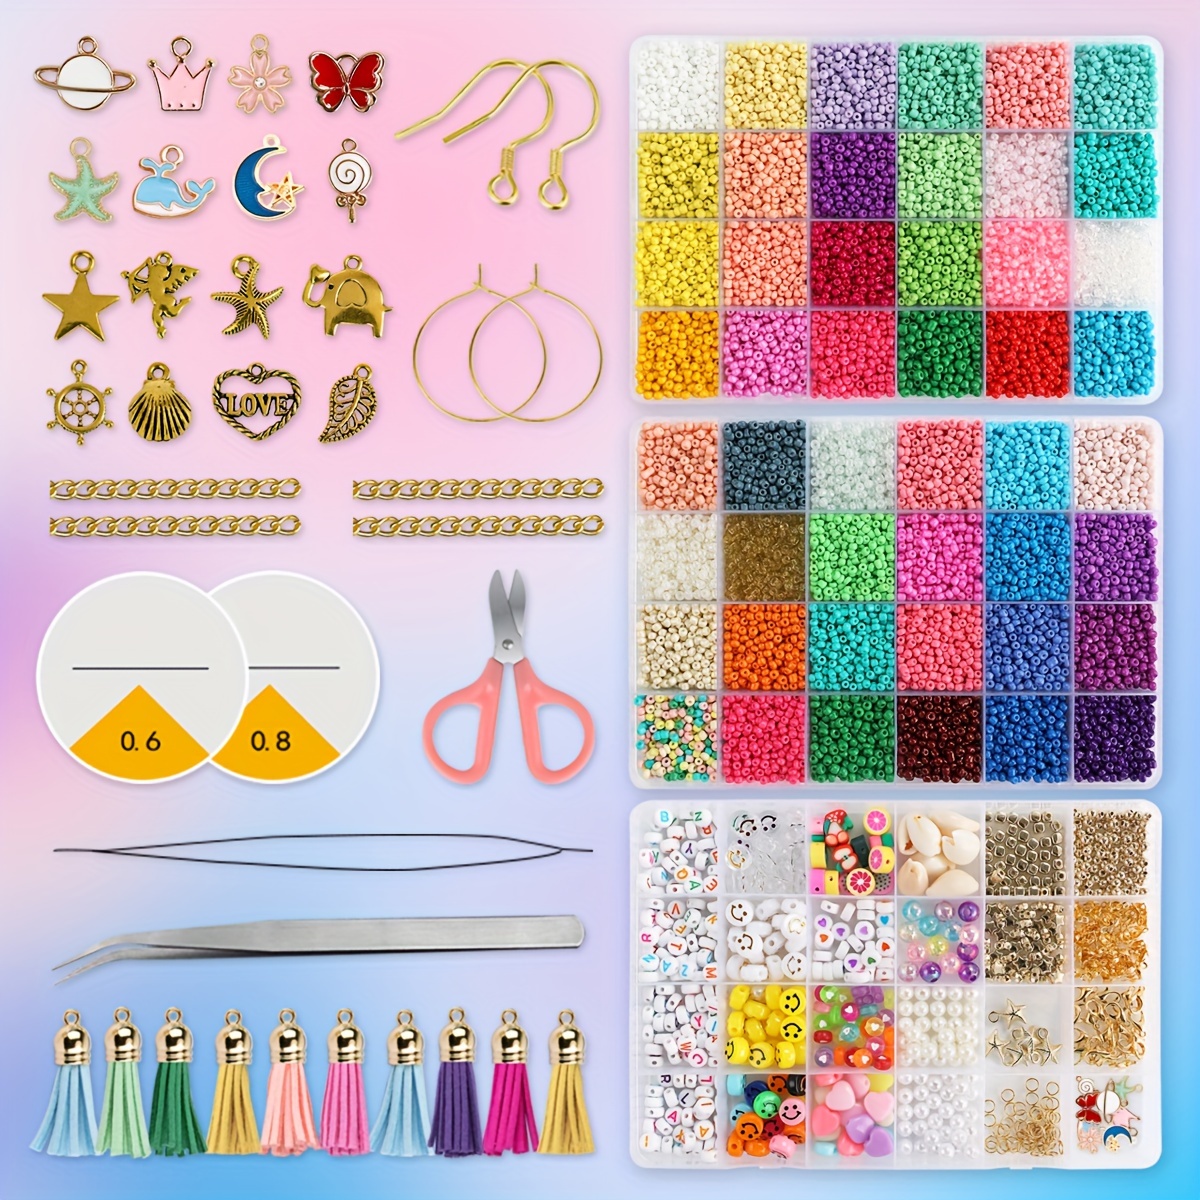 36000+pezzi 2mm 48 Colori Perline Di Semi Di Vetro Per Kit Di Creazione Di  Gioielli Per Braccialetti, Kit Di Assortimenti Di Perline Per Adulti  Ragazze Piccole Perline Per Kit Di Creazione Di